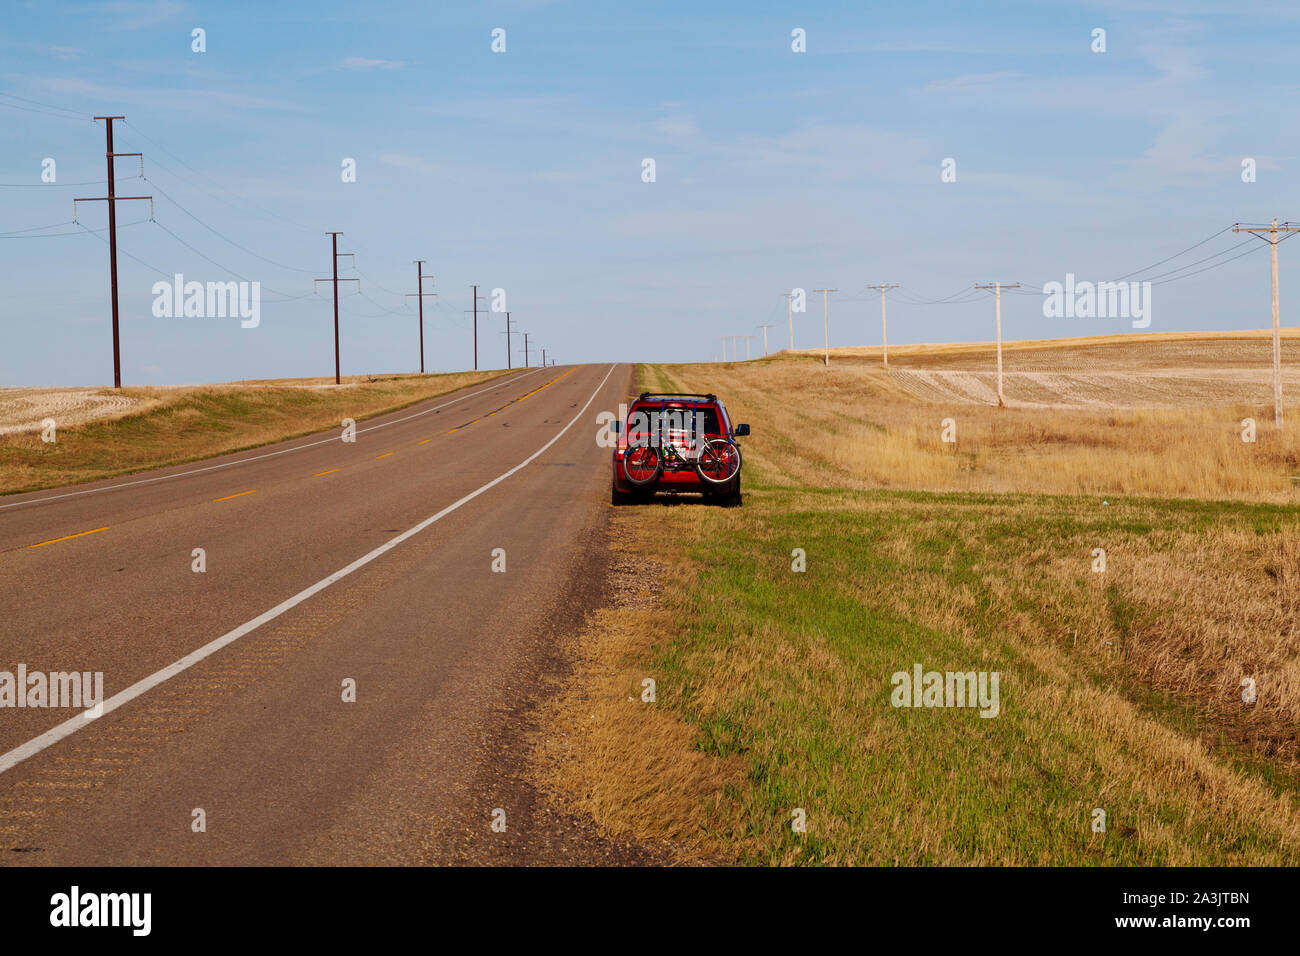 Road trip - car off road in rural Saskatchewan Stock Photo